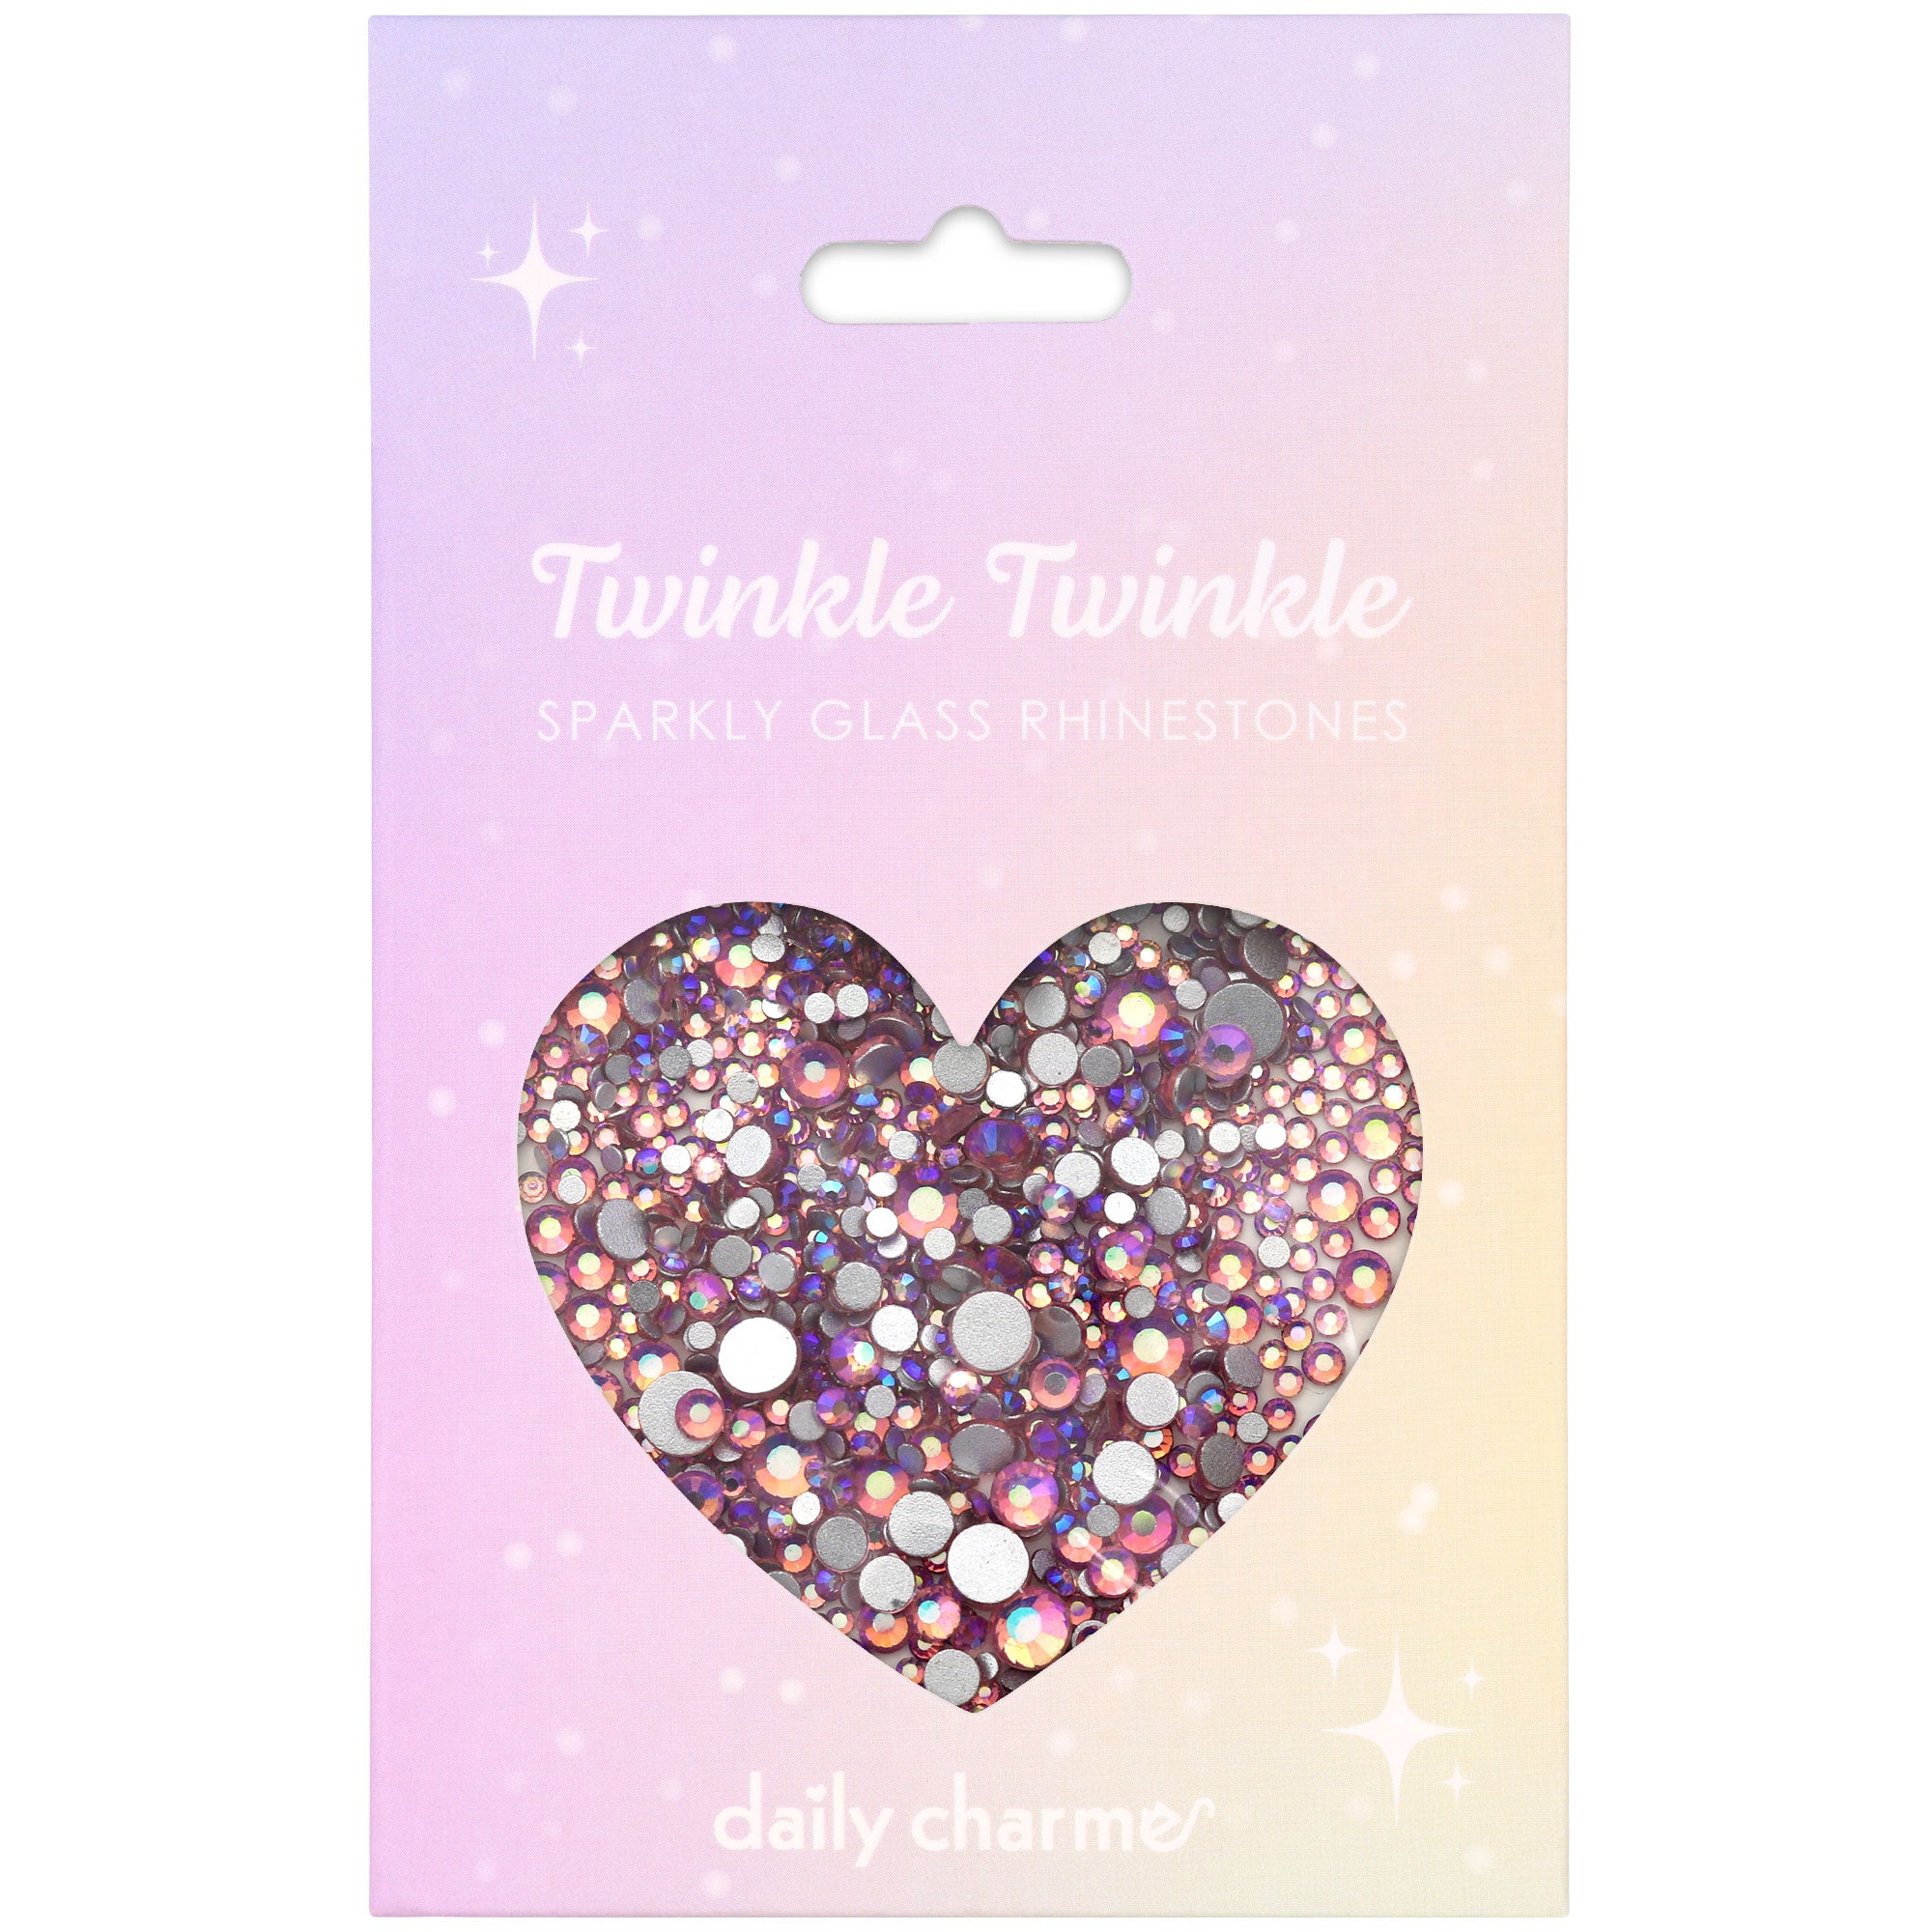 Twinkle Twinkle Round Flatback Rhinestone Mix / Light Pink AB Nail Art Crystal Affordable Quality